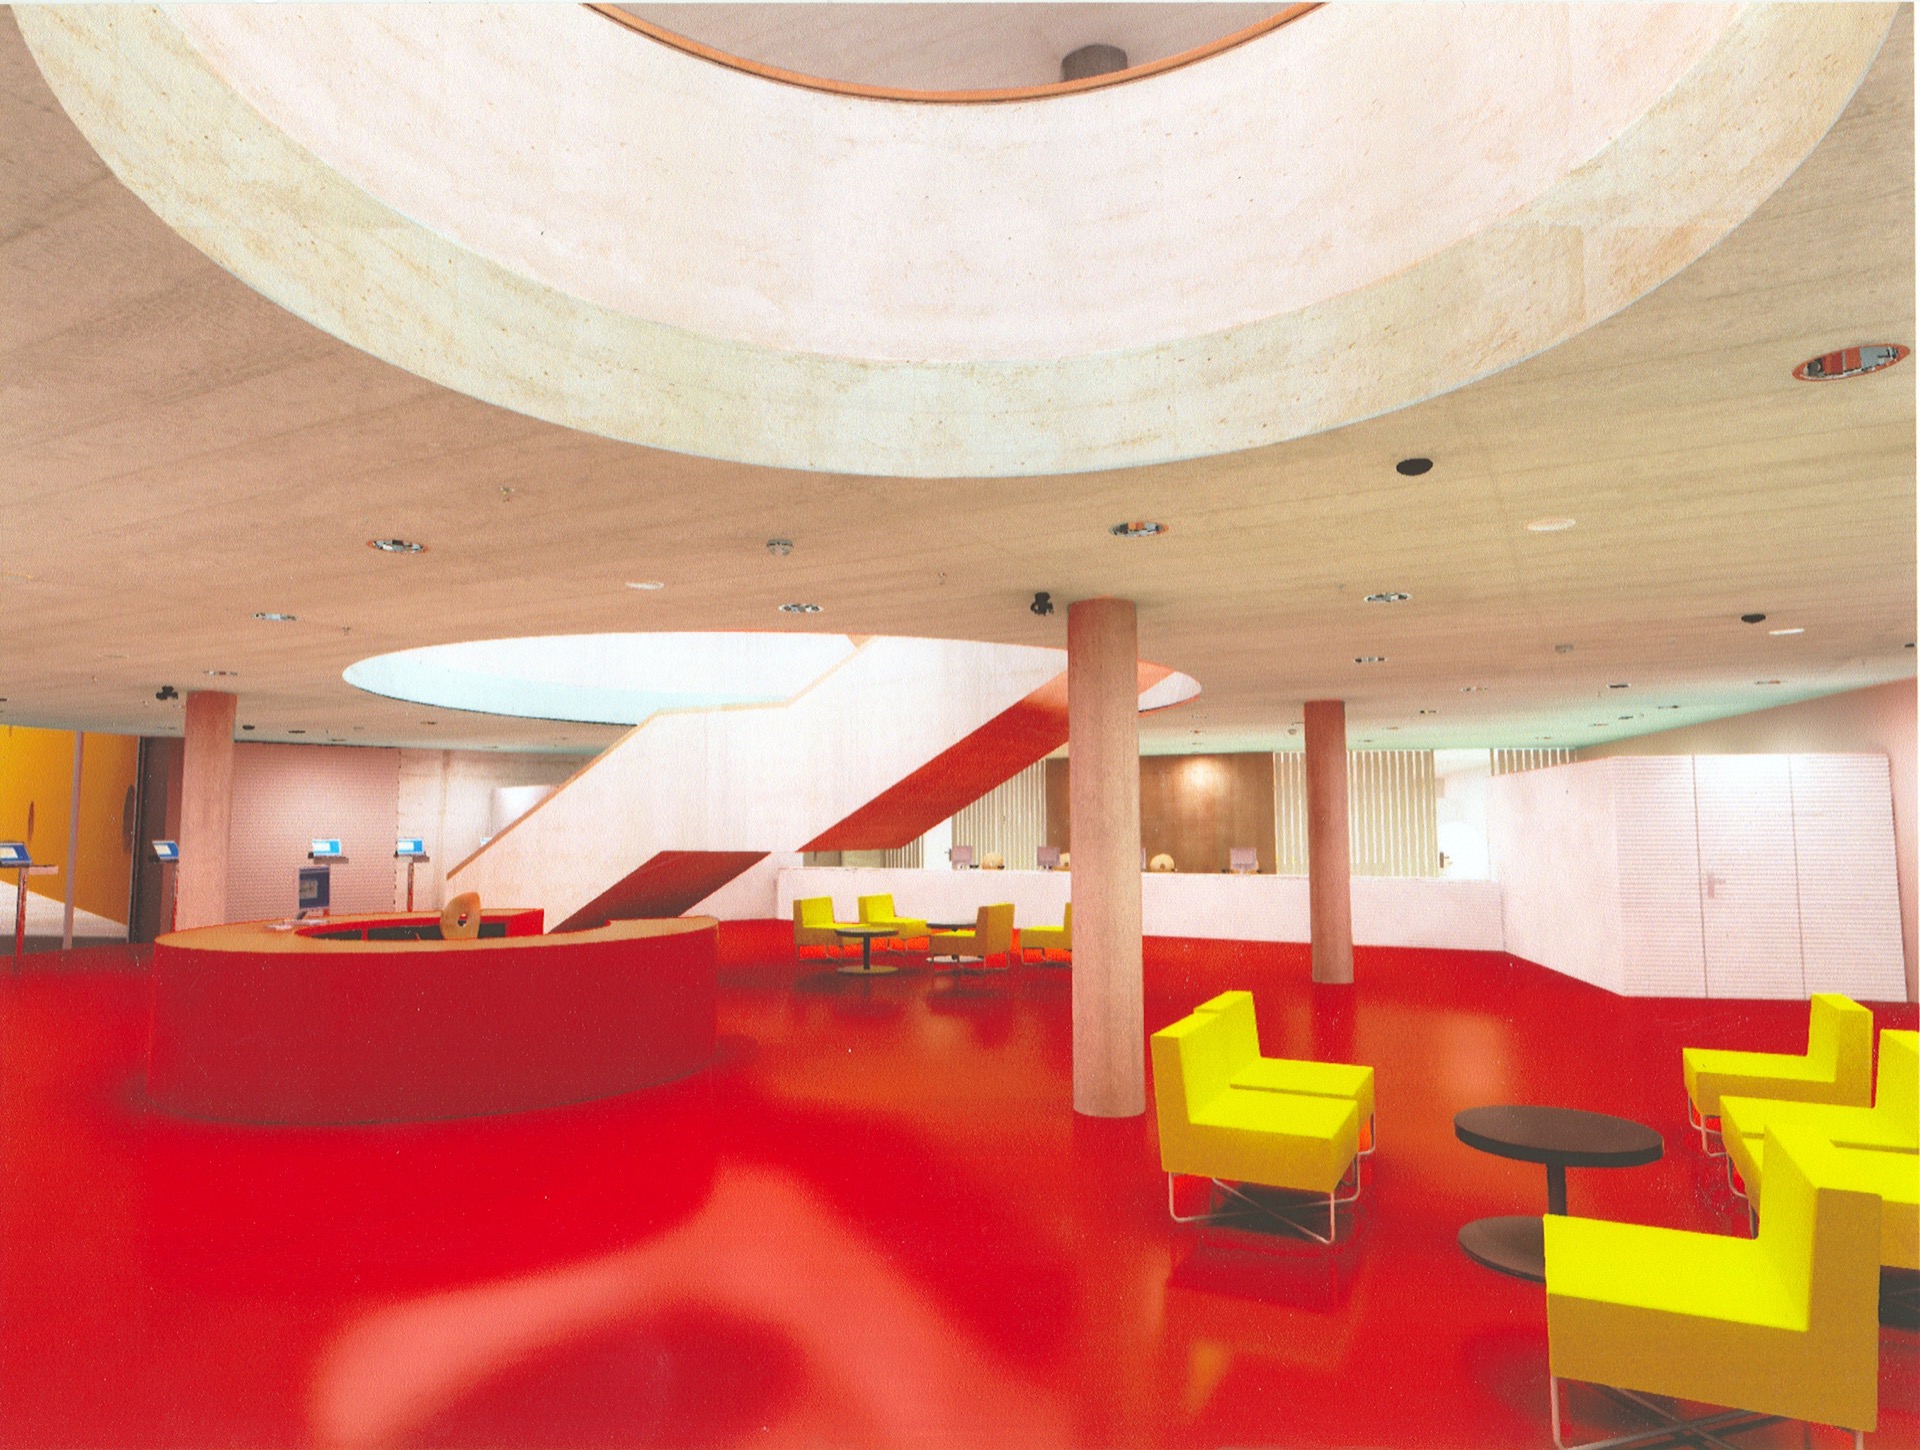 SVK HK Research Library in Hradec Králové building architecture design interior view